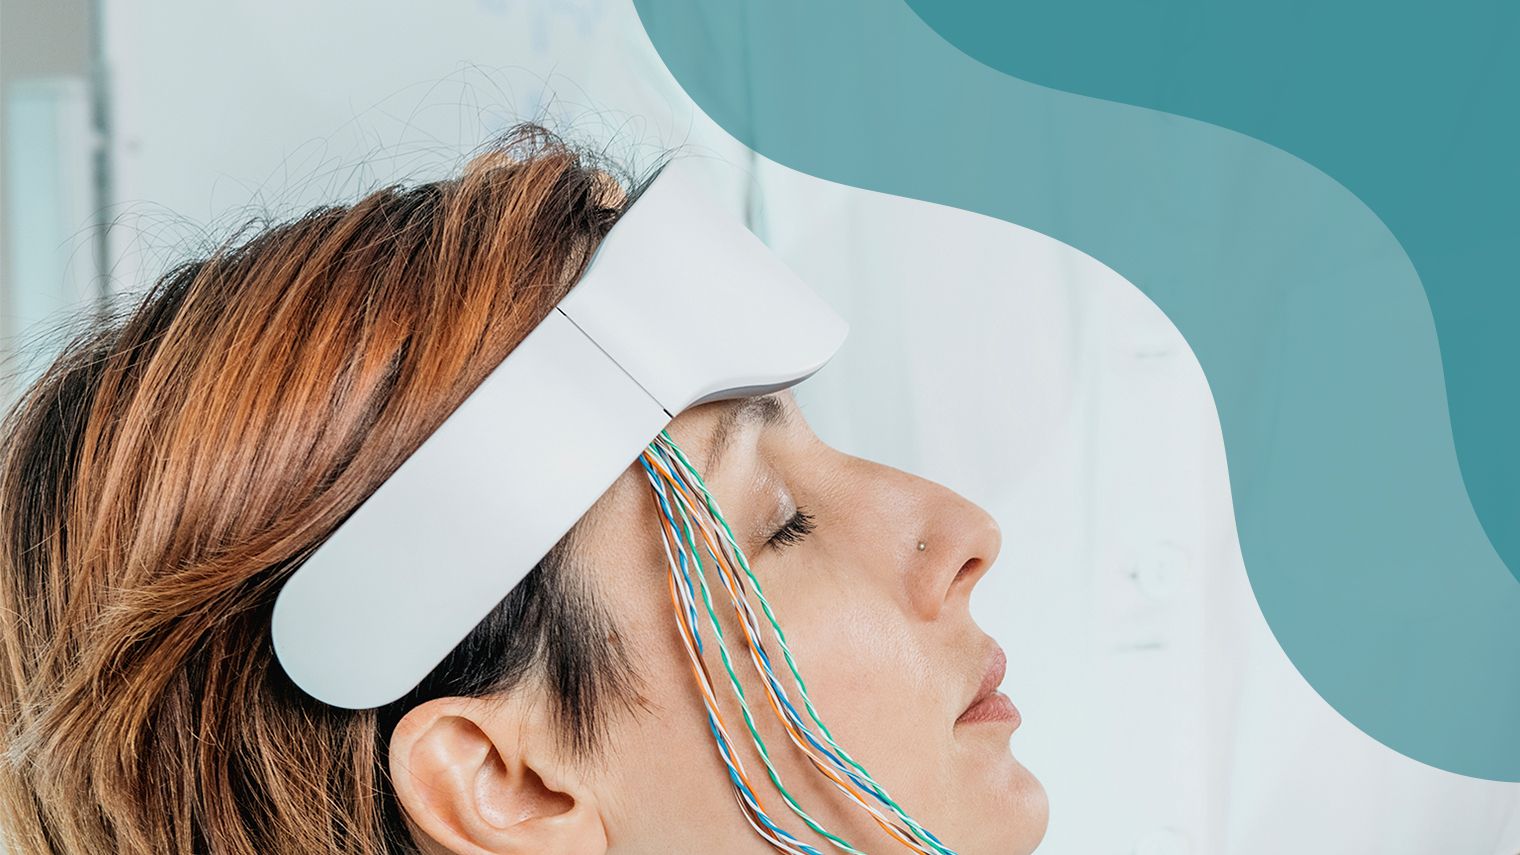 Can Electrical Nerve Stimulation Treat Migraine?